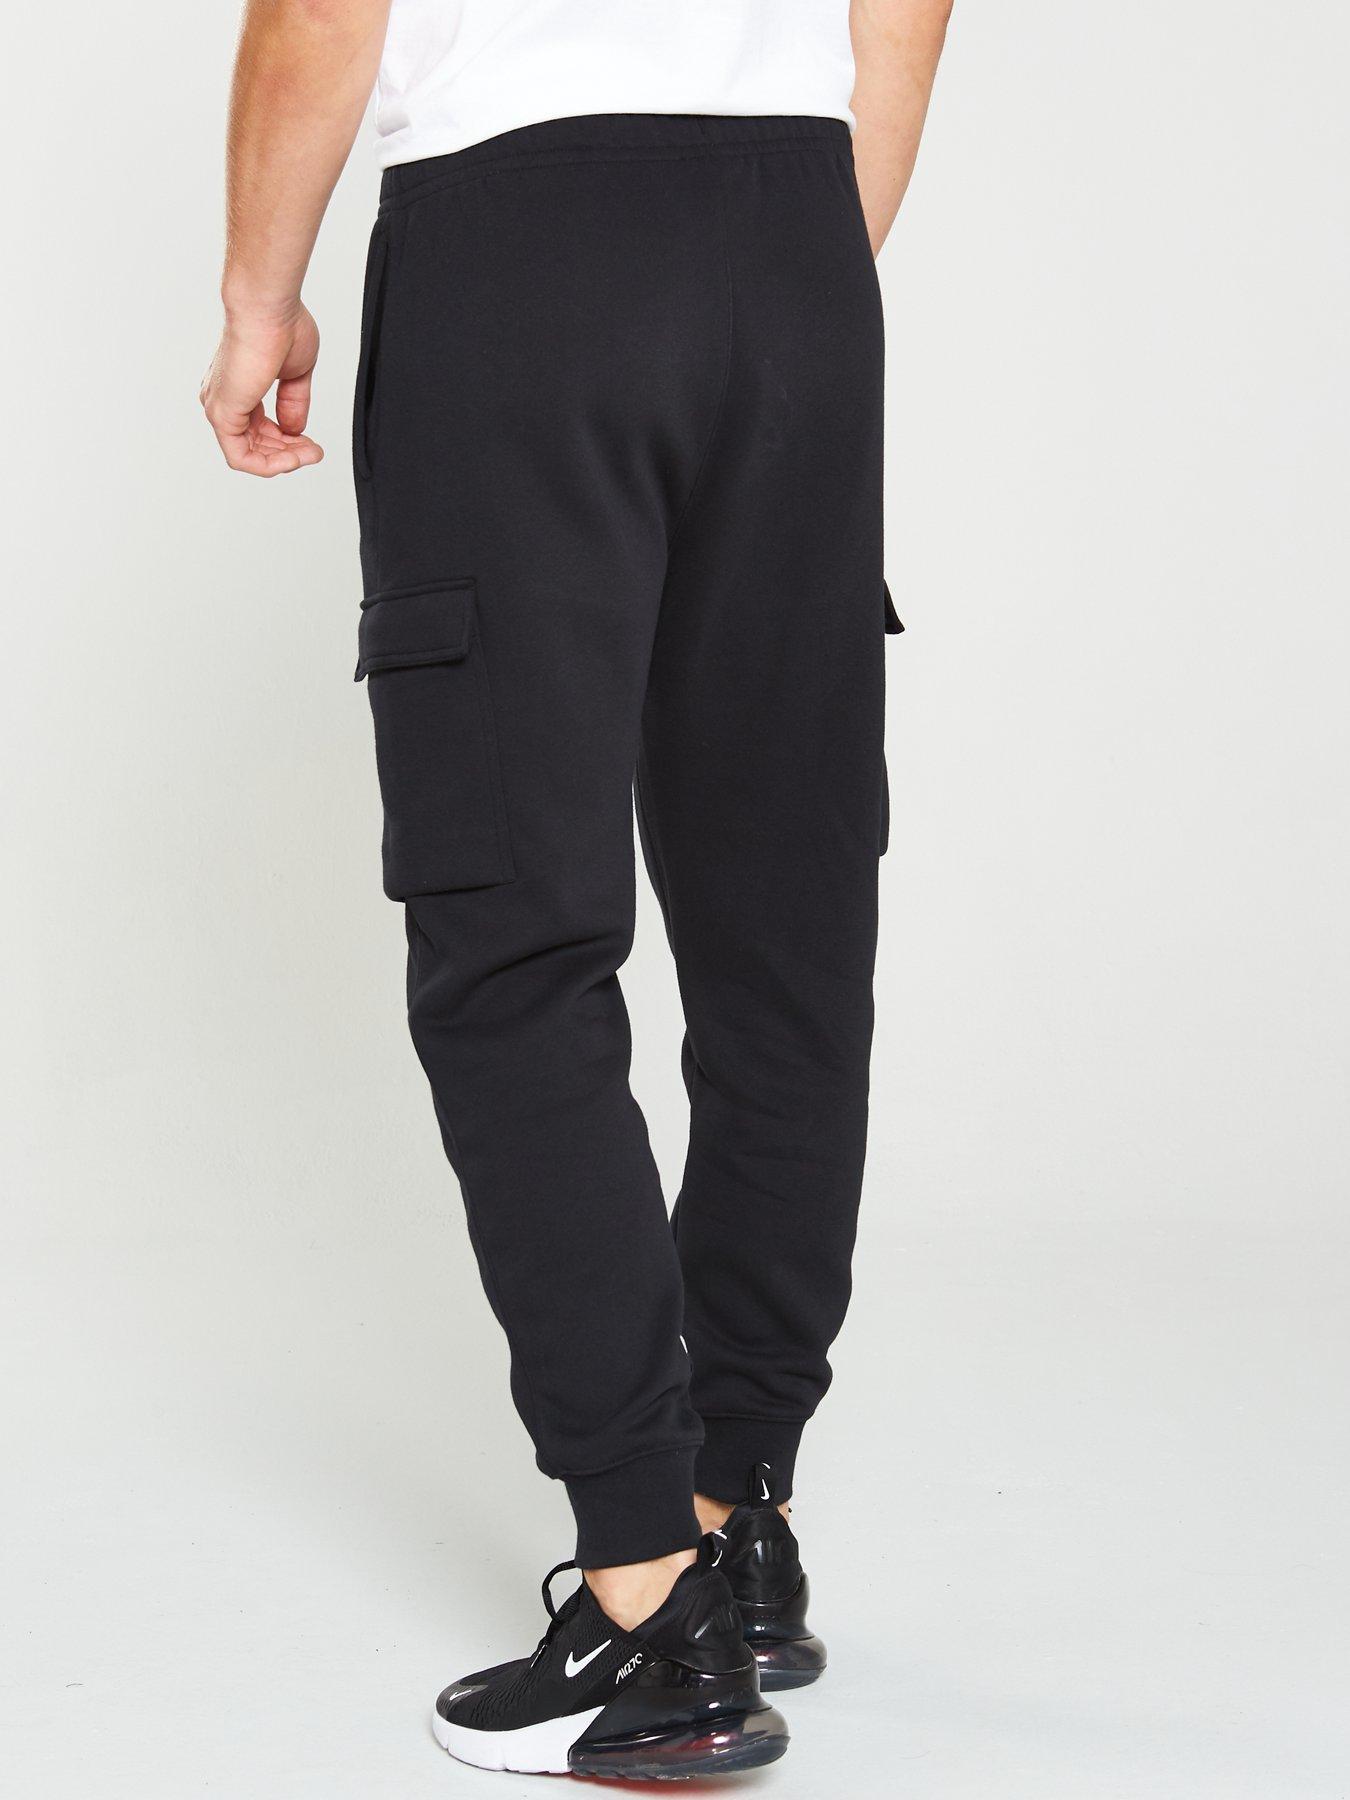 Nike Solid Black Track Pants Size L - 60% off